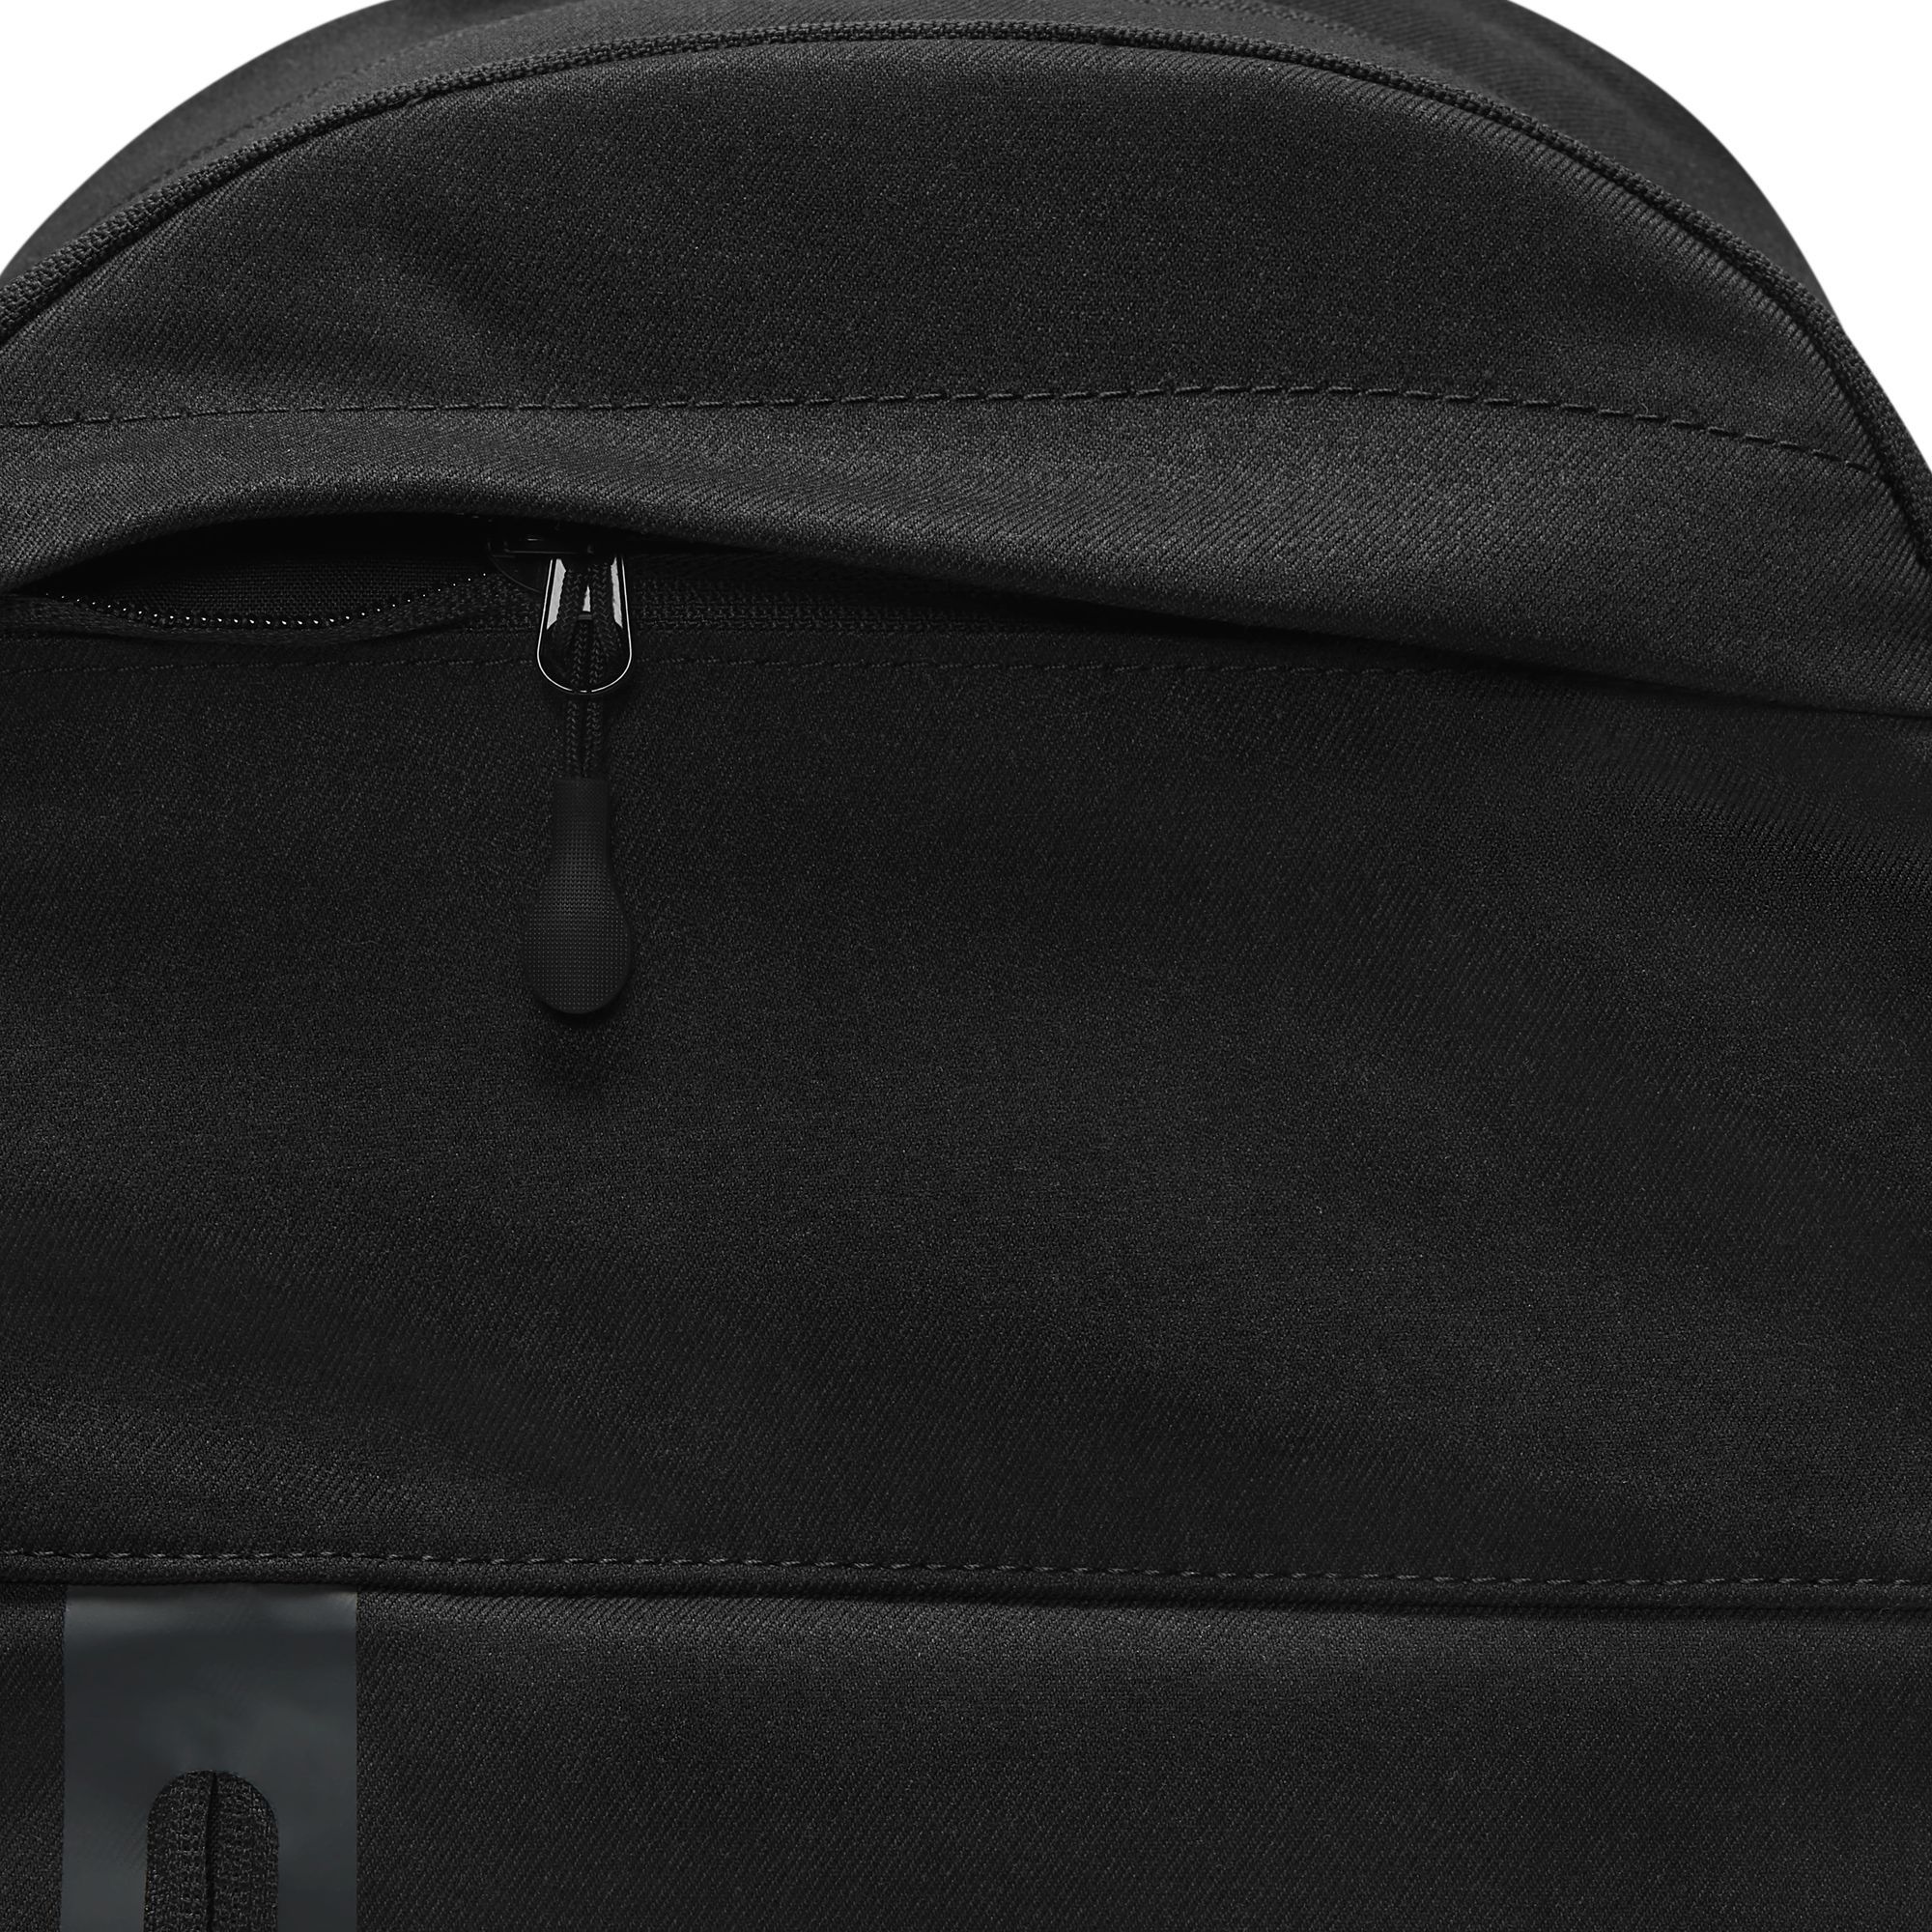 Nike Nike Elemental Premium Crossbody Bag Black